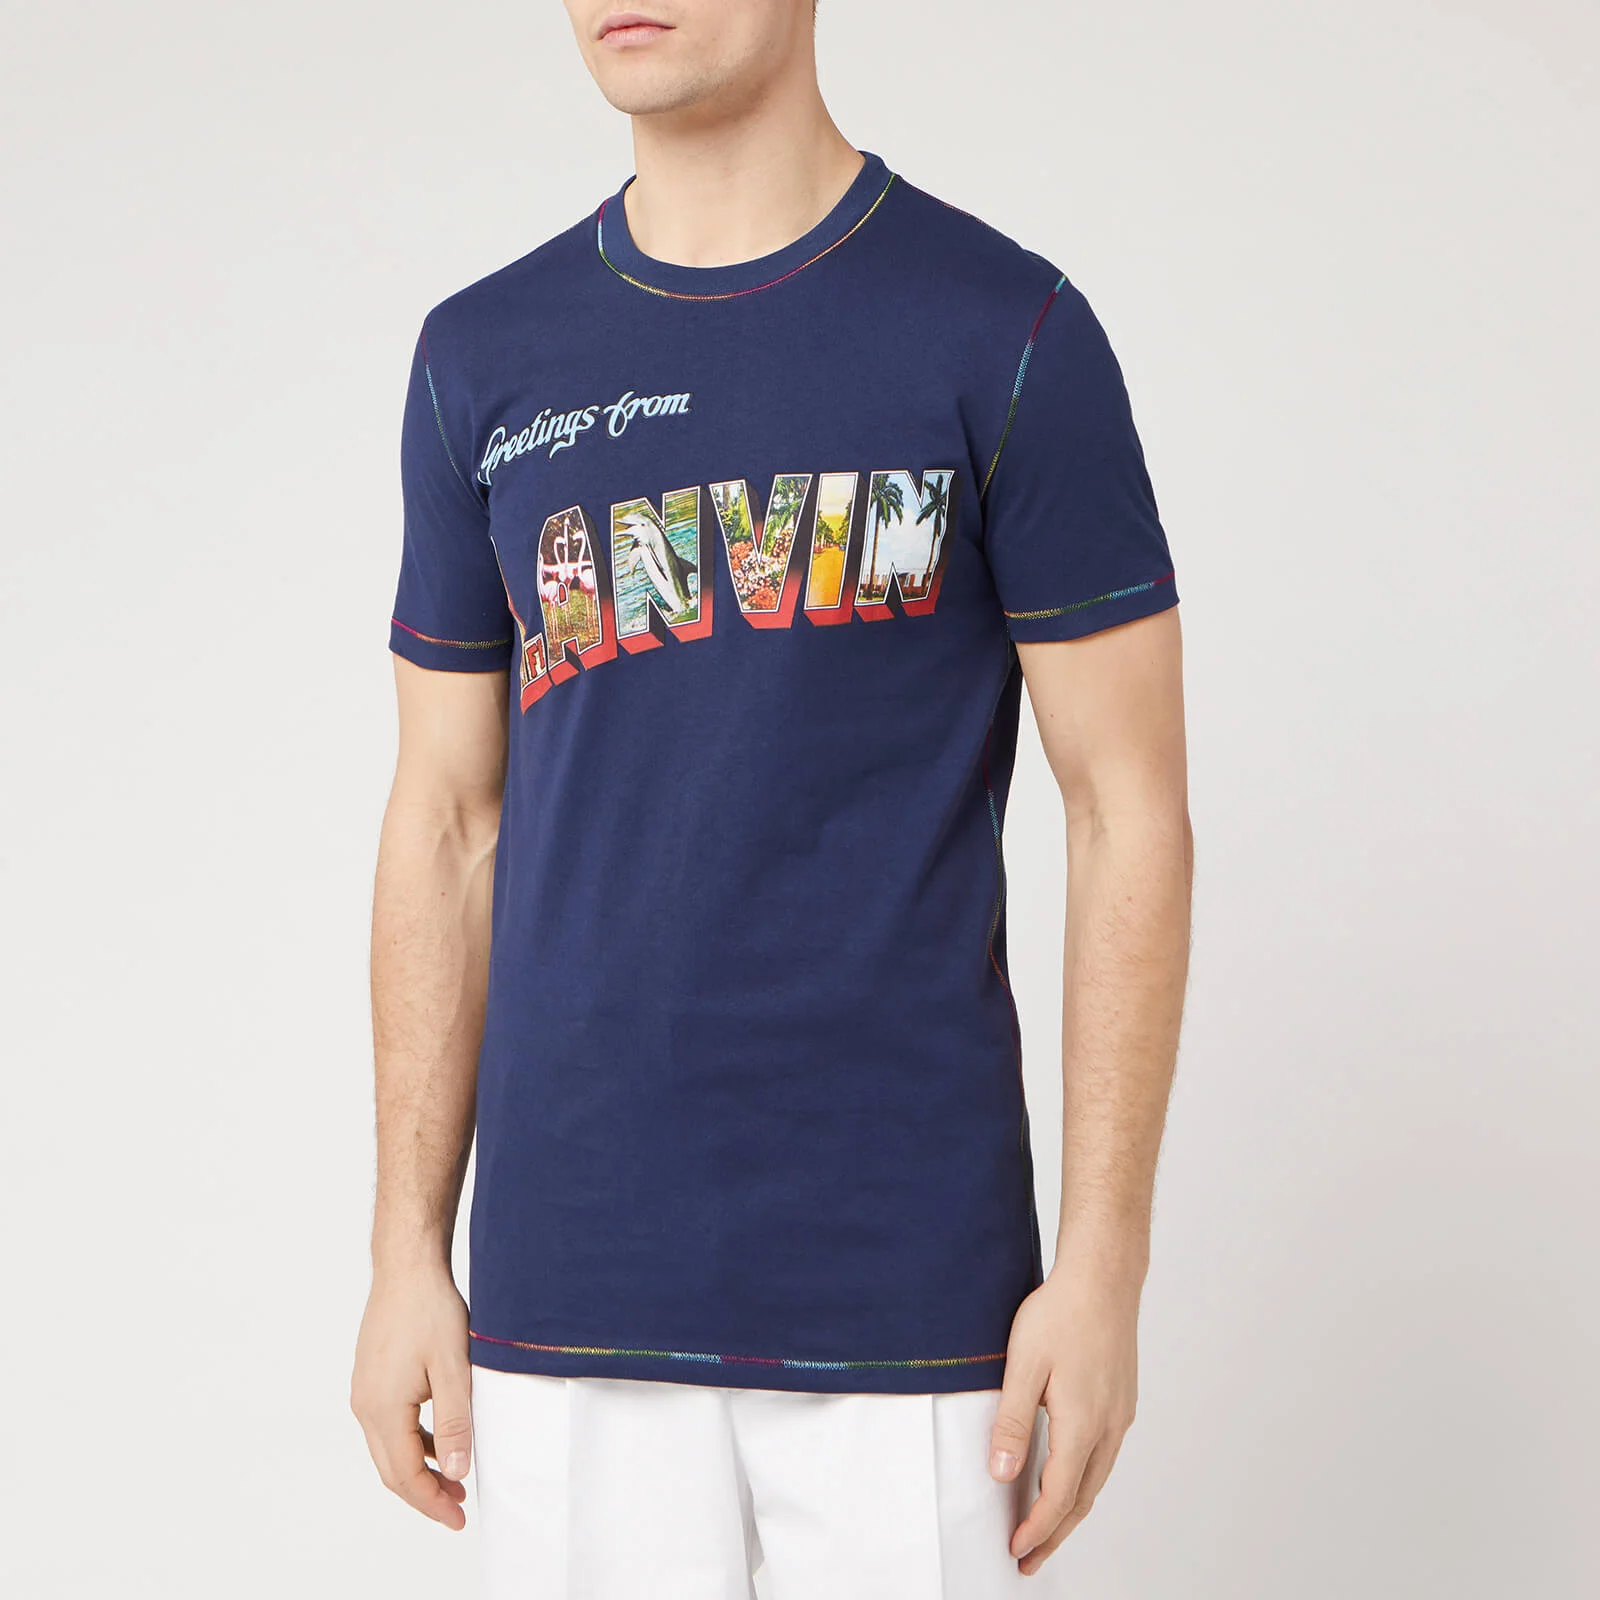 Lanvin Men's Print Short Sleeve T-Shirt - Navy Image 1